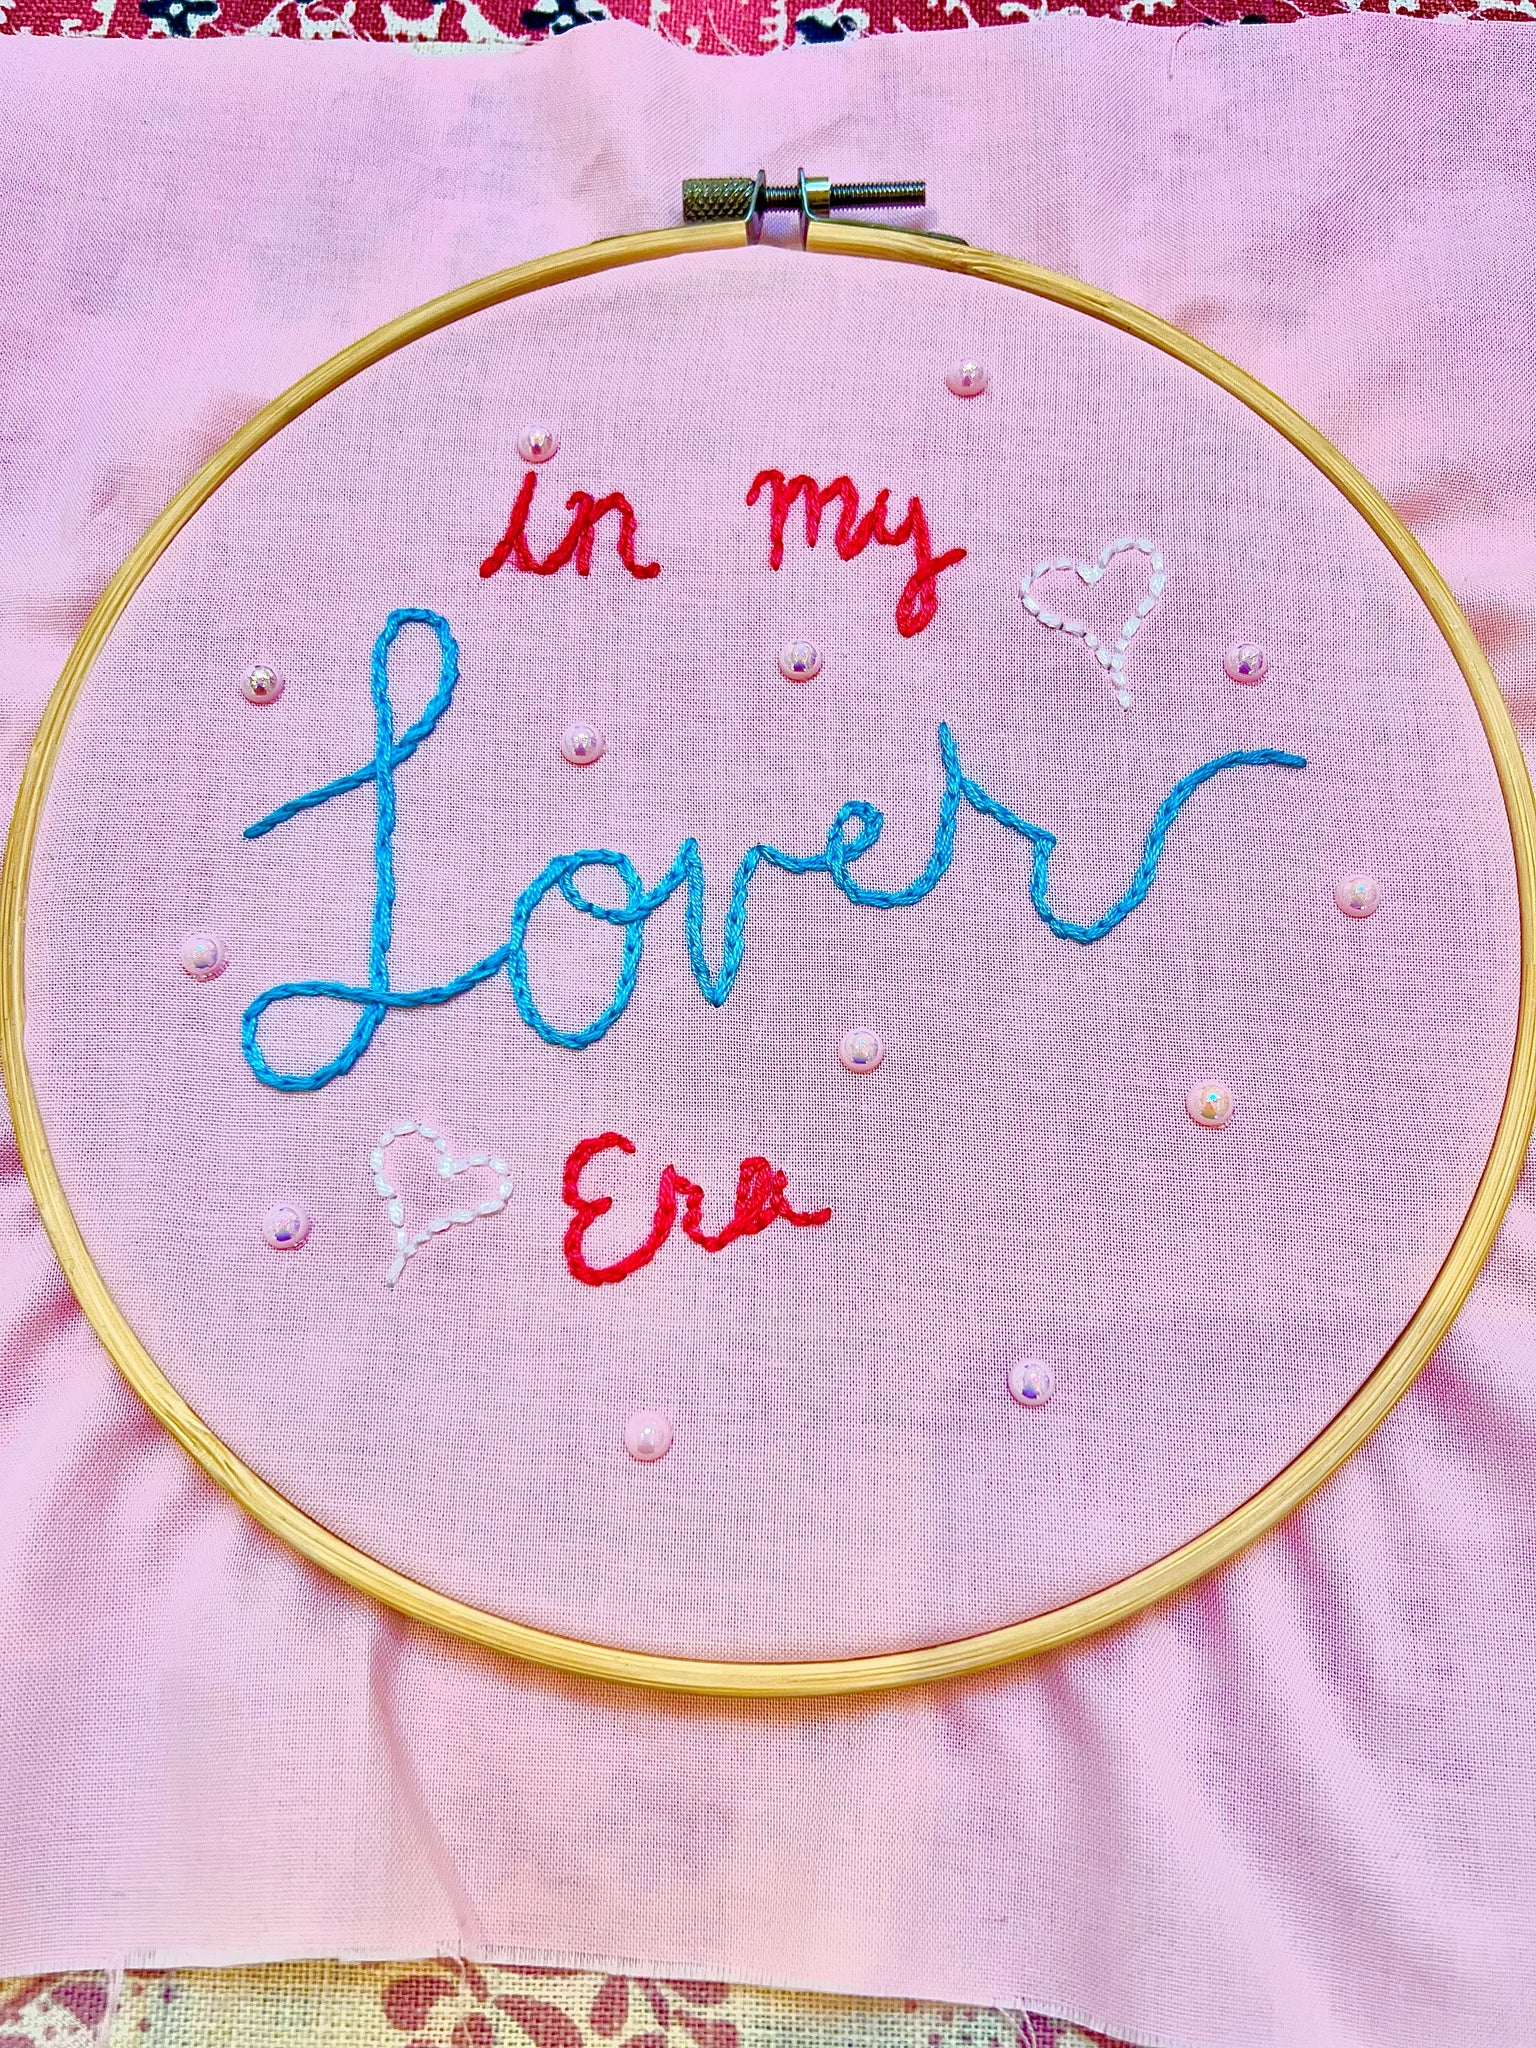 Taylor Swift Embroidery Workshop - BROOKLINE